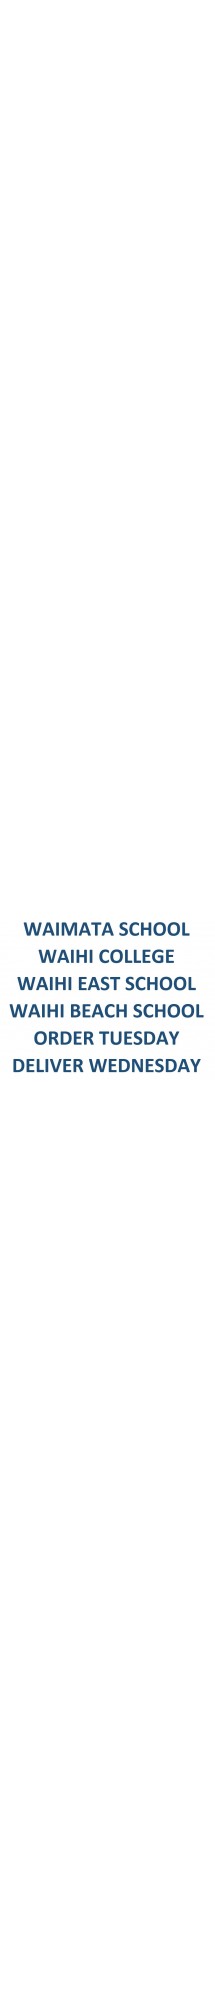 Waimata, Waihi East, Waihi Beach Schools, Waihi College